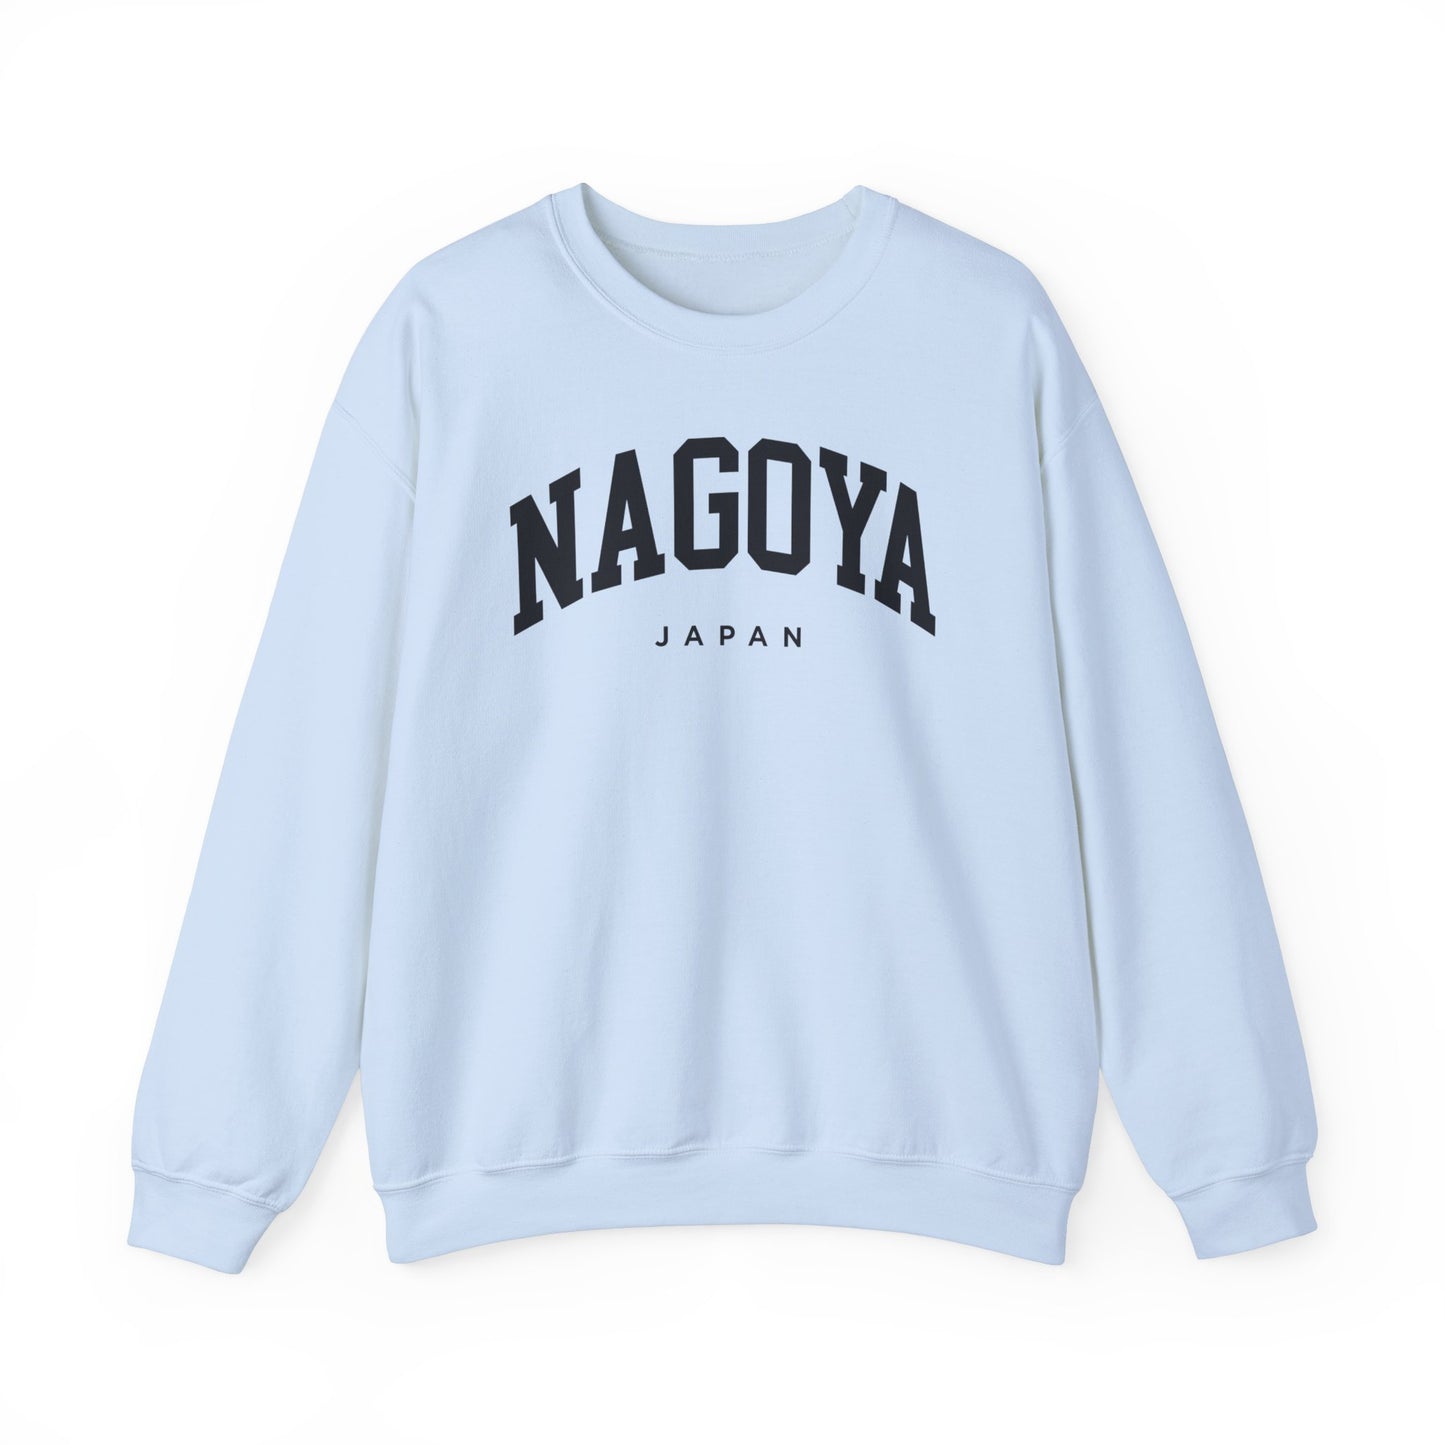 Nagoya Japan Sweatshirt